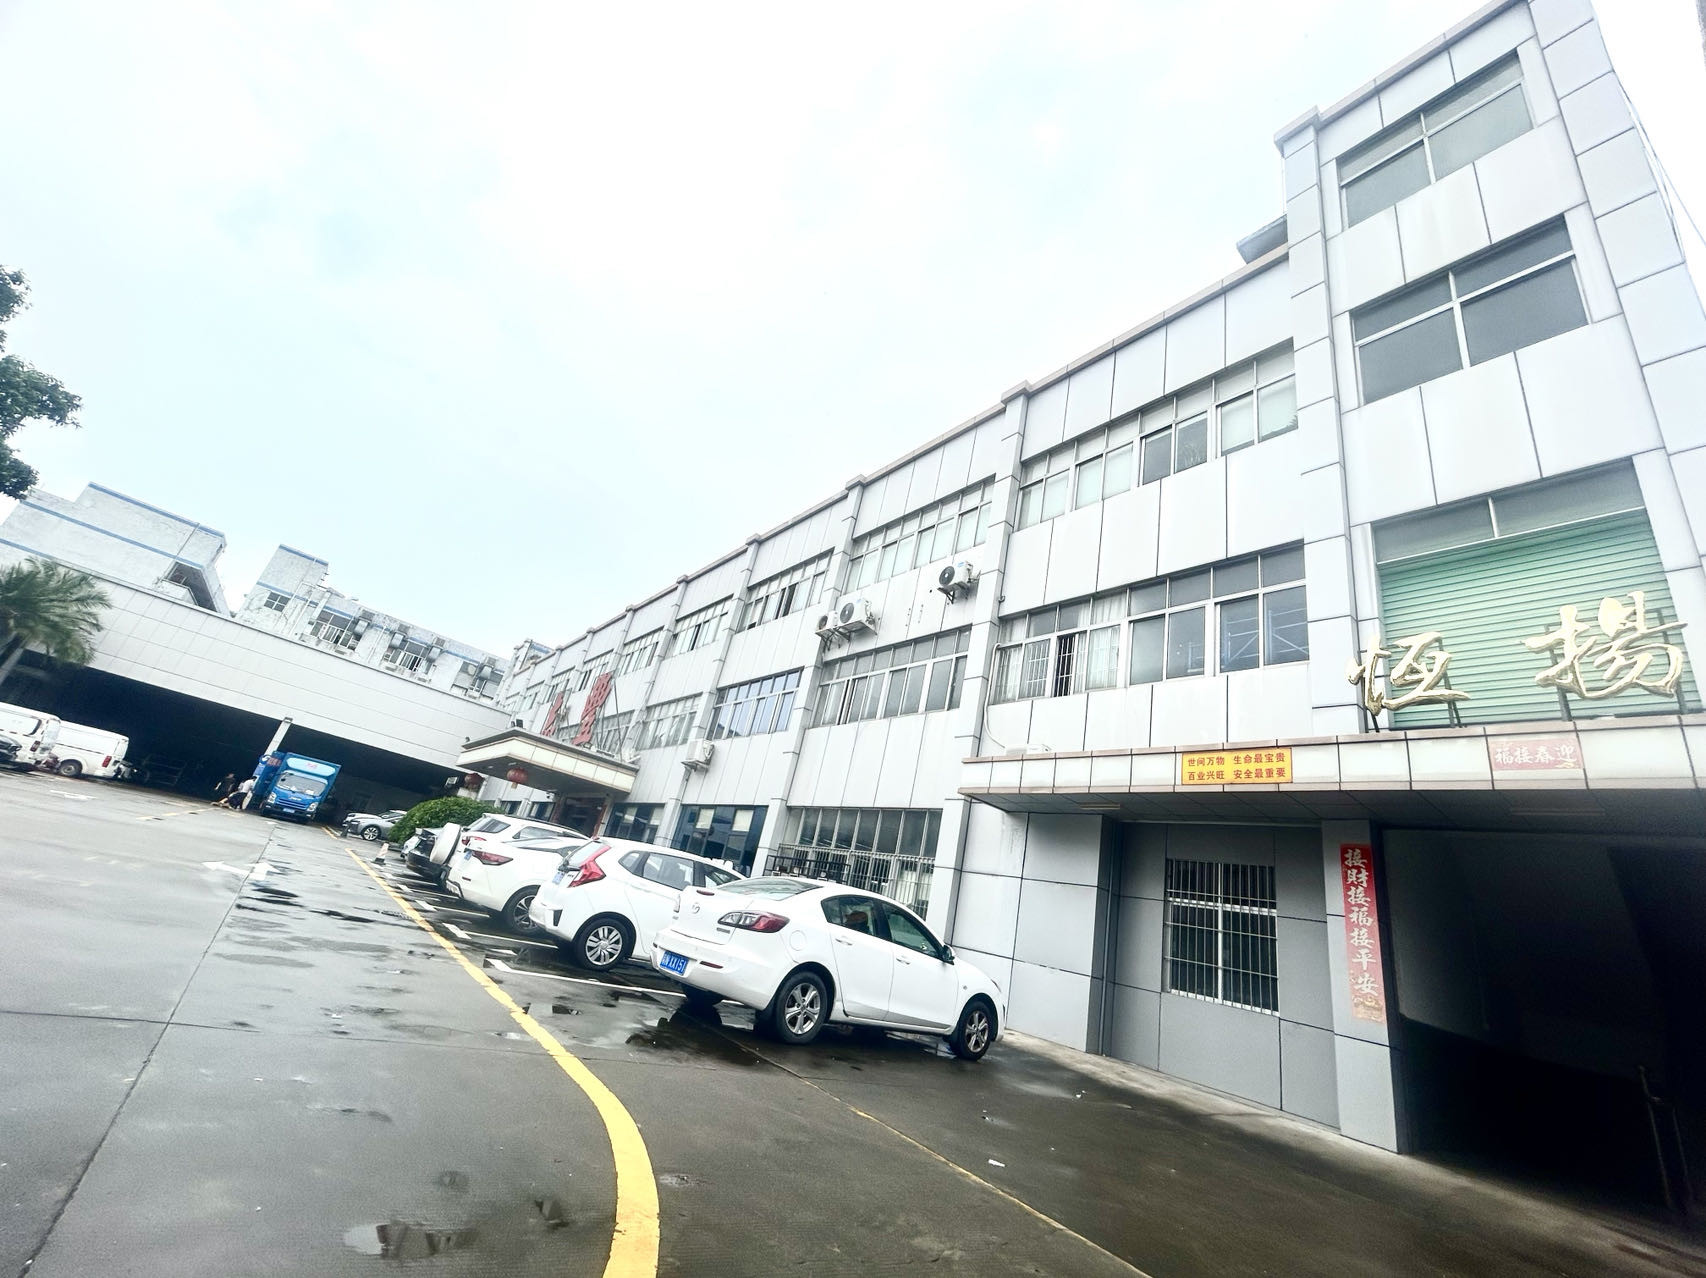 Shenzhen Hengyang Optical Co., Ltd.